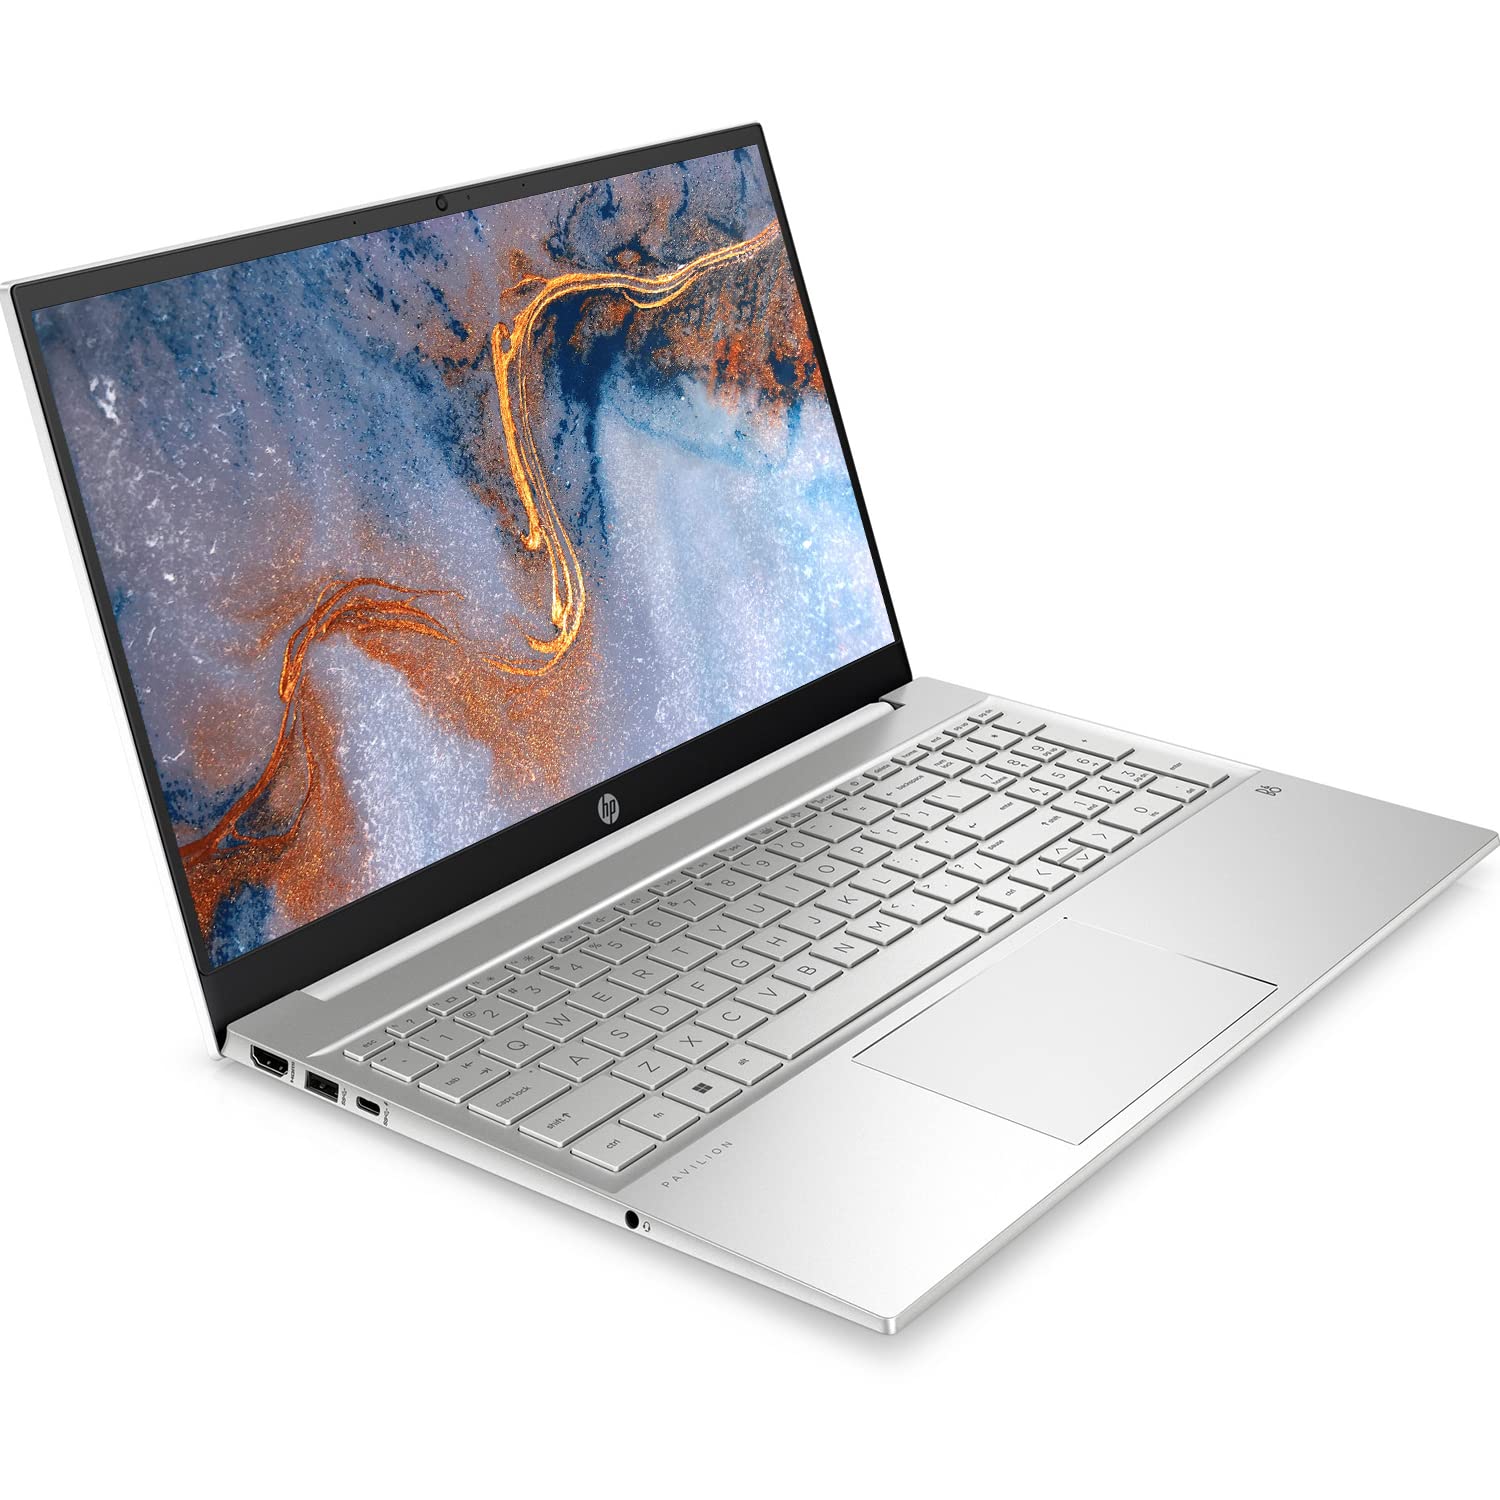 2022 Newest HP Pavilion Laptop, 15.6" FHD Anti-Glare IPS Display, Intel Core i7-1195G7 Quad-Core Processor, Intel Iris Xe Graphics, 32GB RAM, 1TB PCIe SSD, Fingerprint Reader, HDMI 2.0, Windows 11